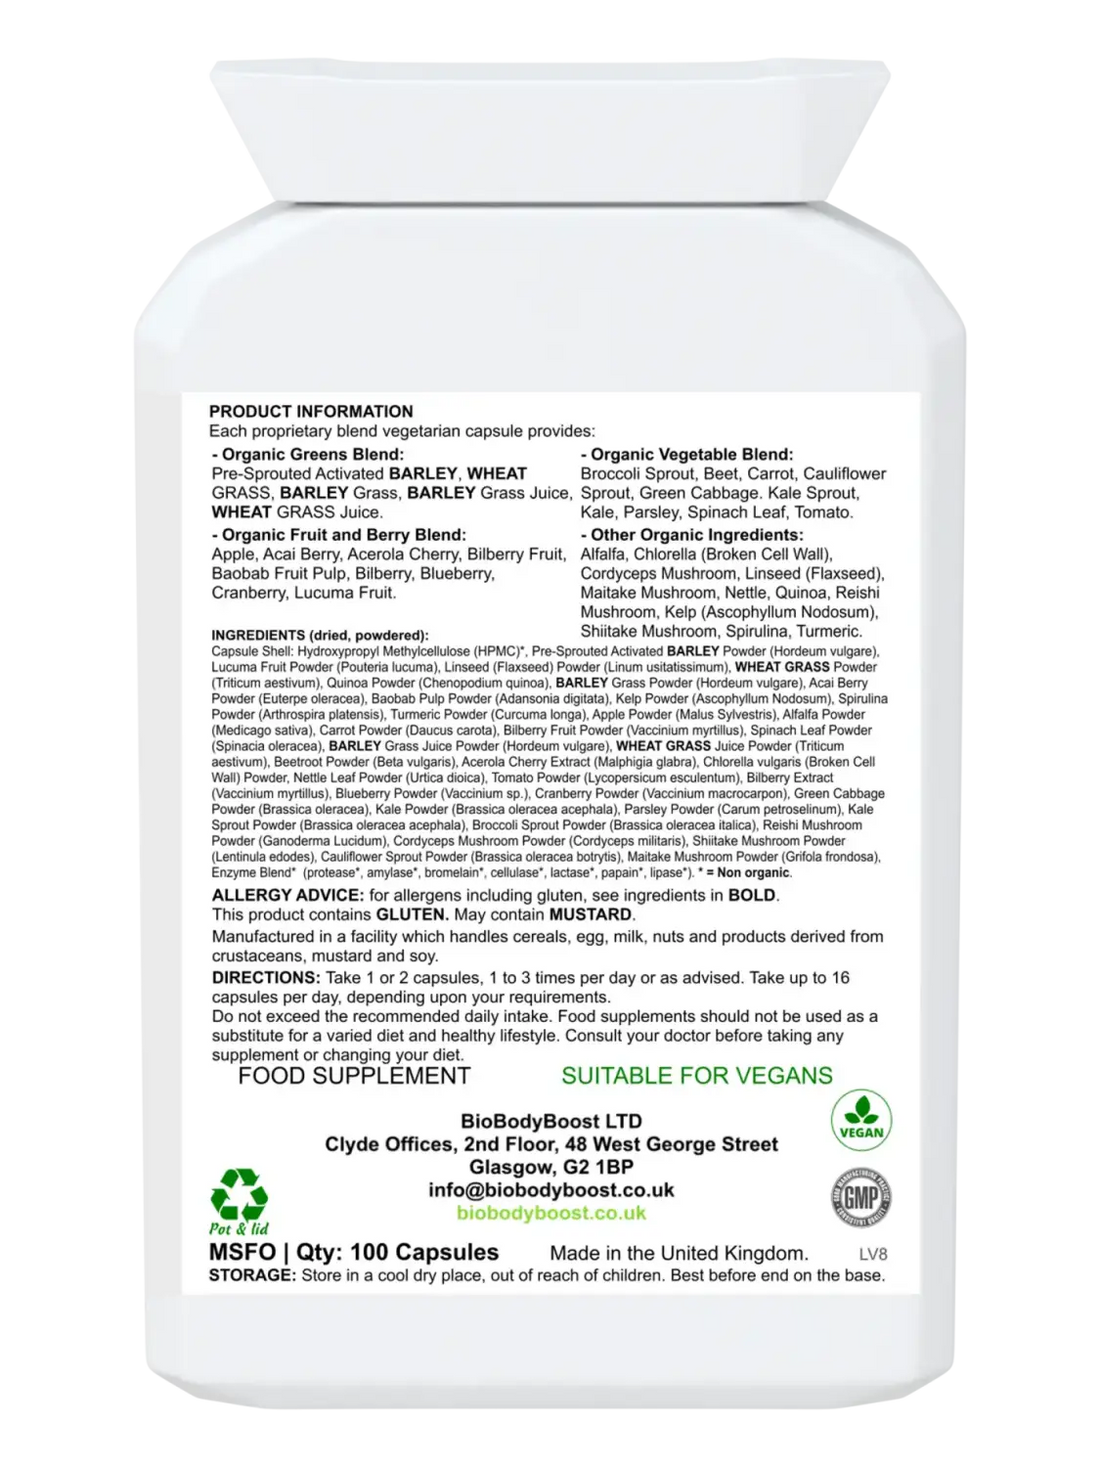 SuperBio Capsules Vegan Organic Foods Blend - Vitamins & Supplements wheat grass barley